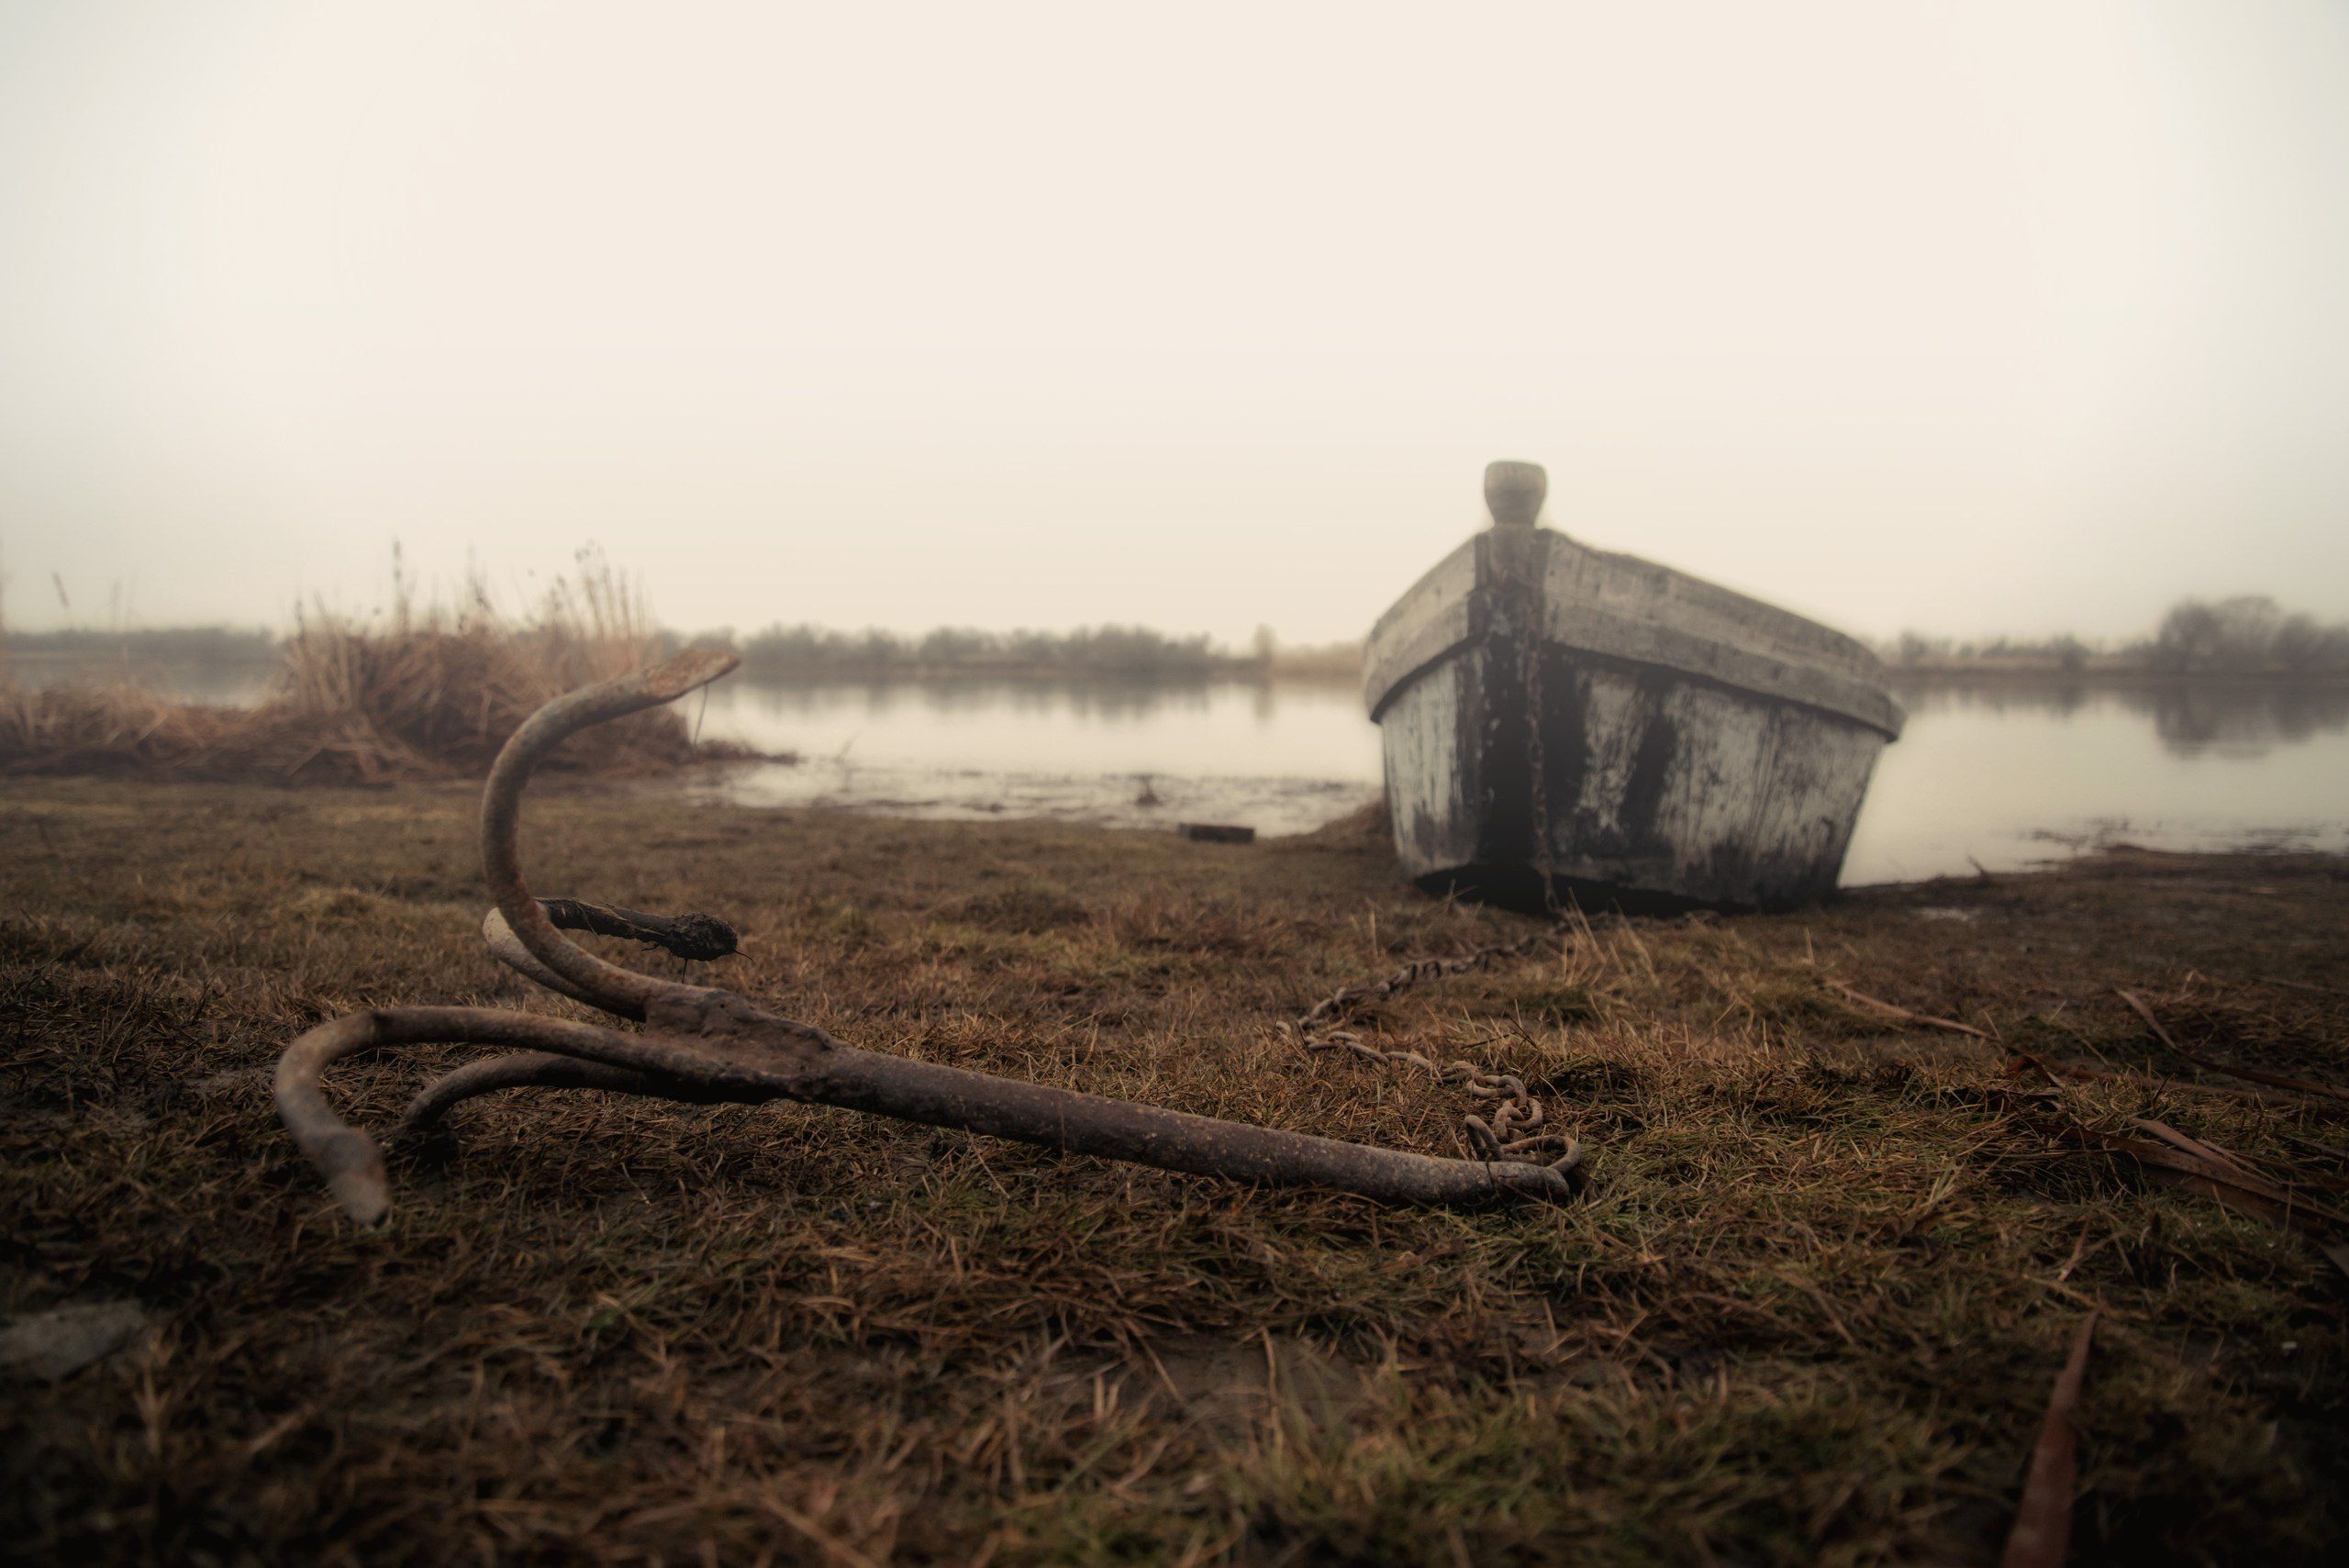 осень лодка река дон туман дождь autumn boat oldboat don river fog rain, Егор Бугримов